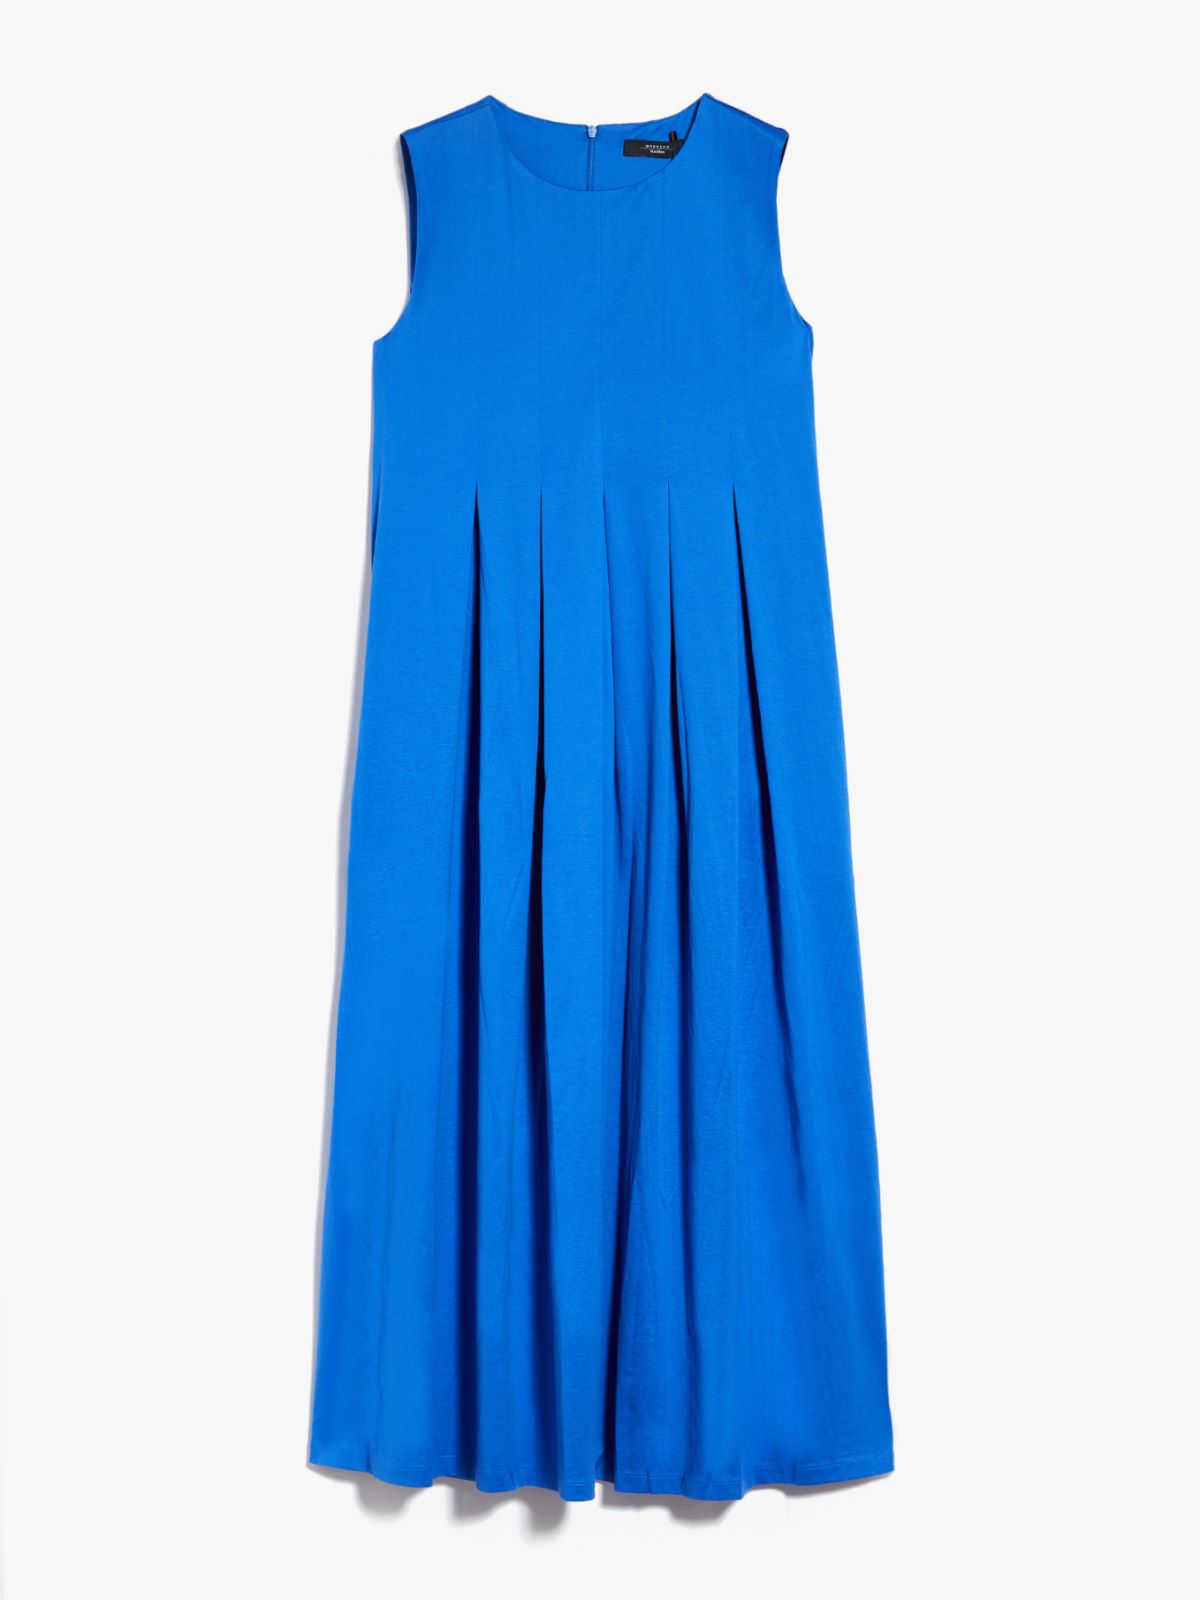 Cotton jersey dress  - CORNFLOWER BLUE - Weekend Max Mara - 5